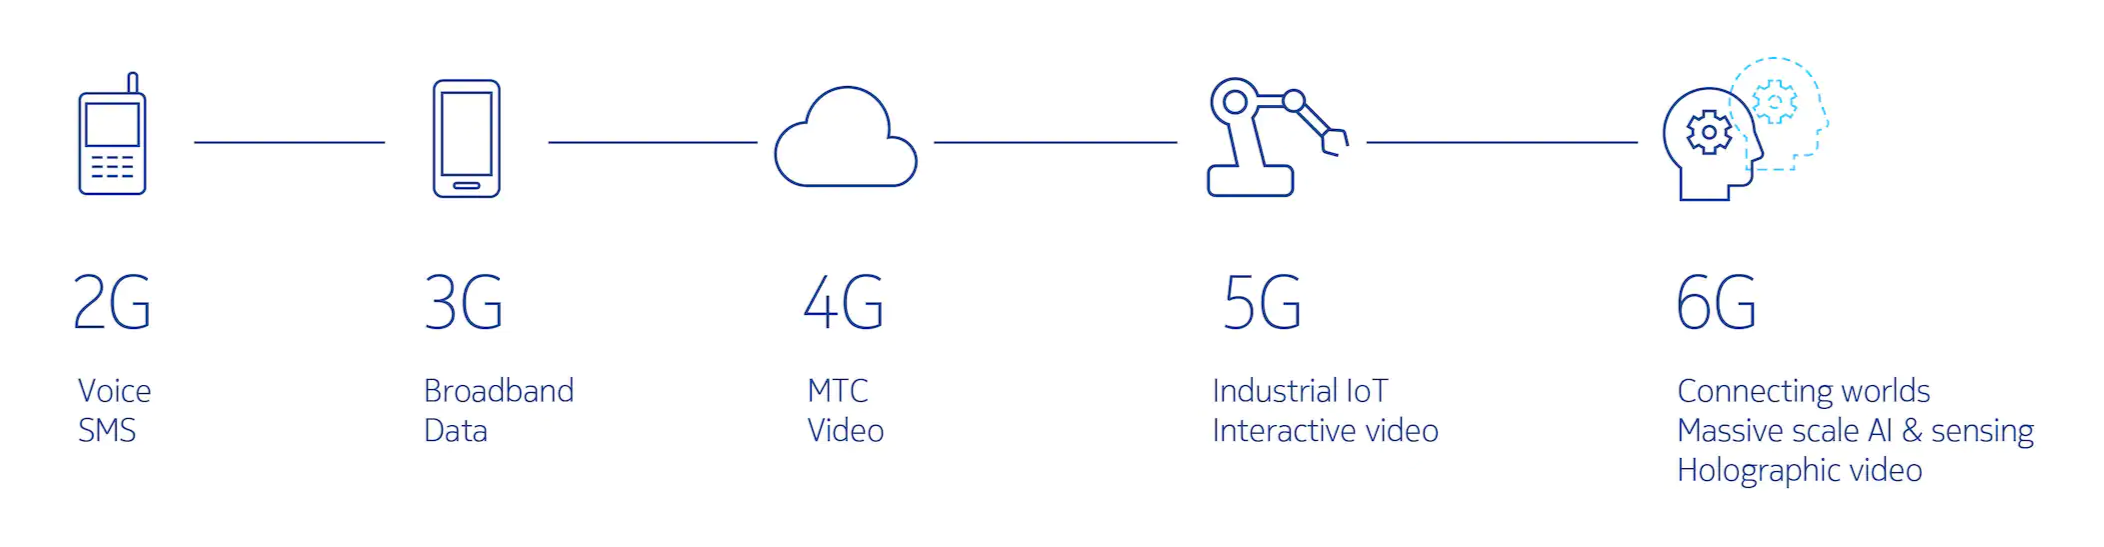 graphic showing 2G through 6G broadband tech capabilities